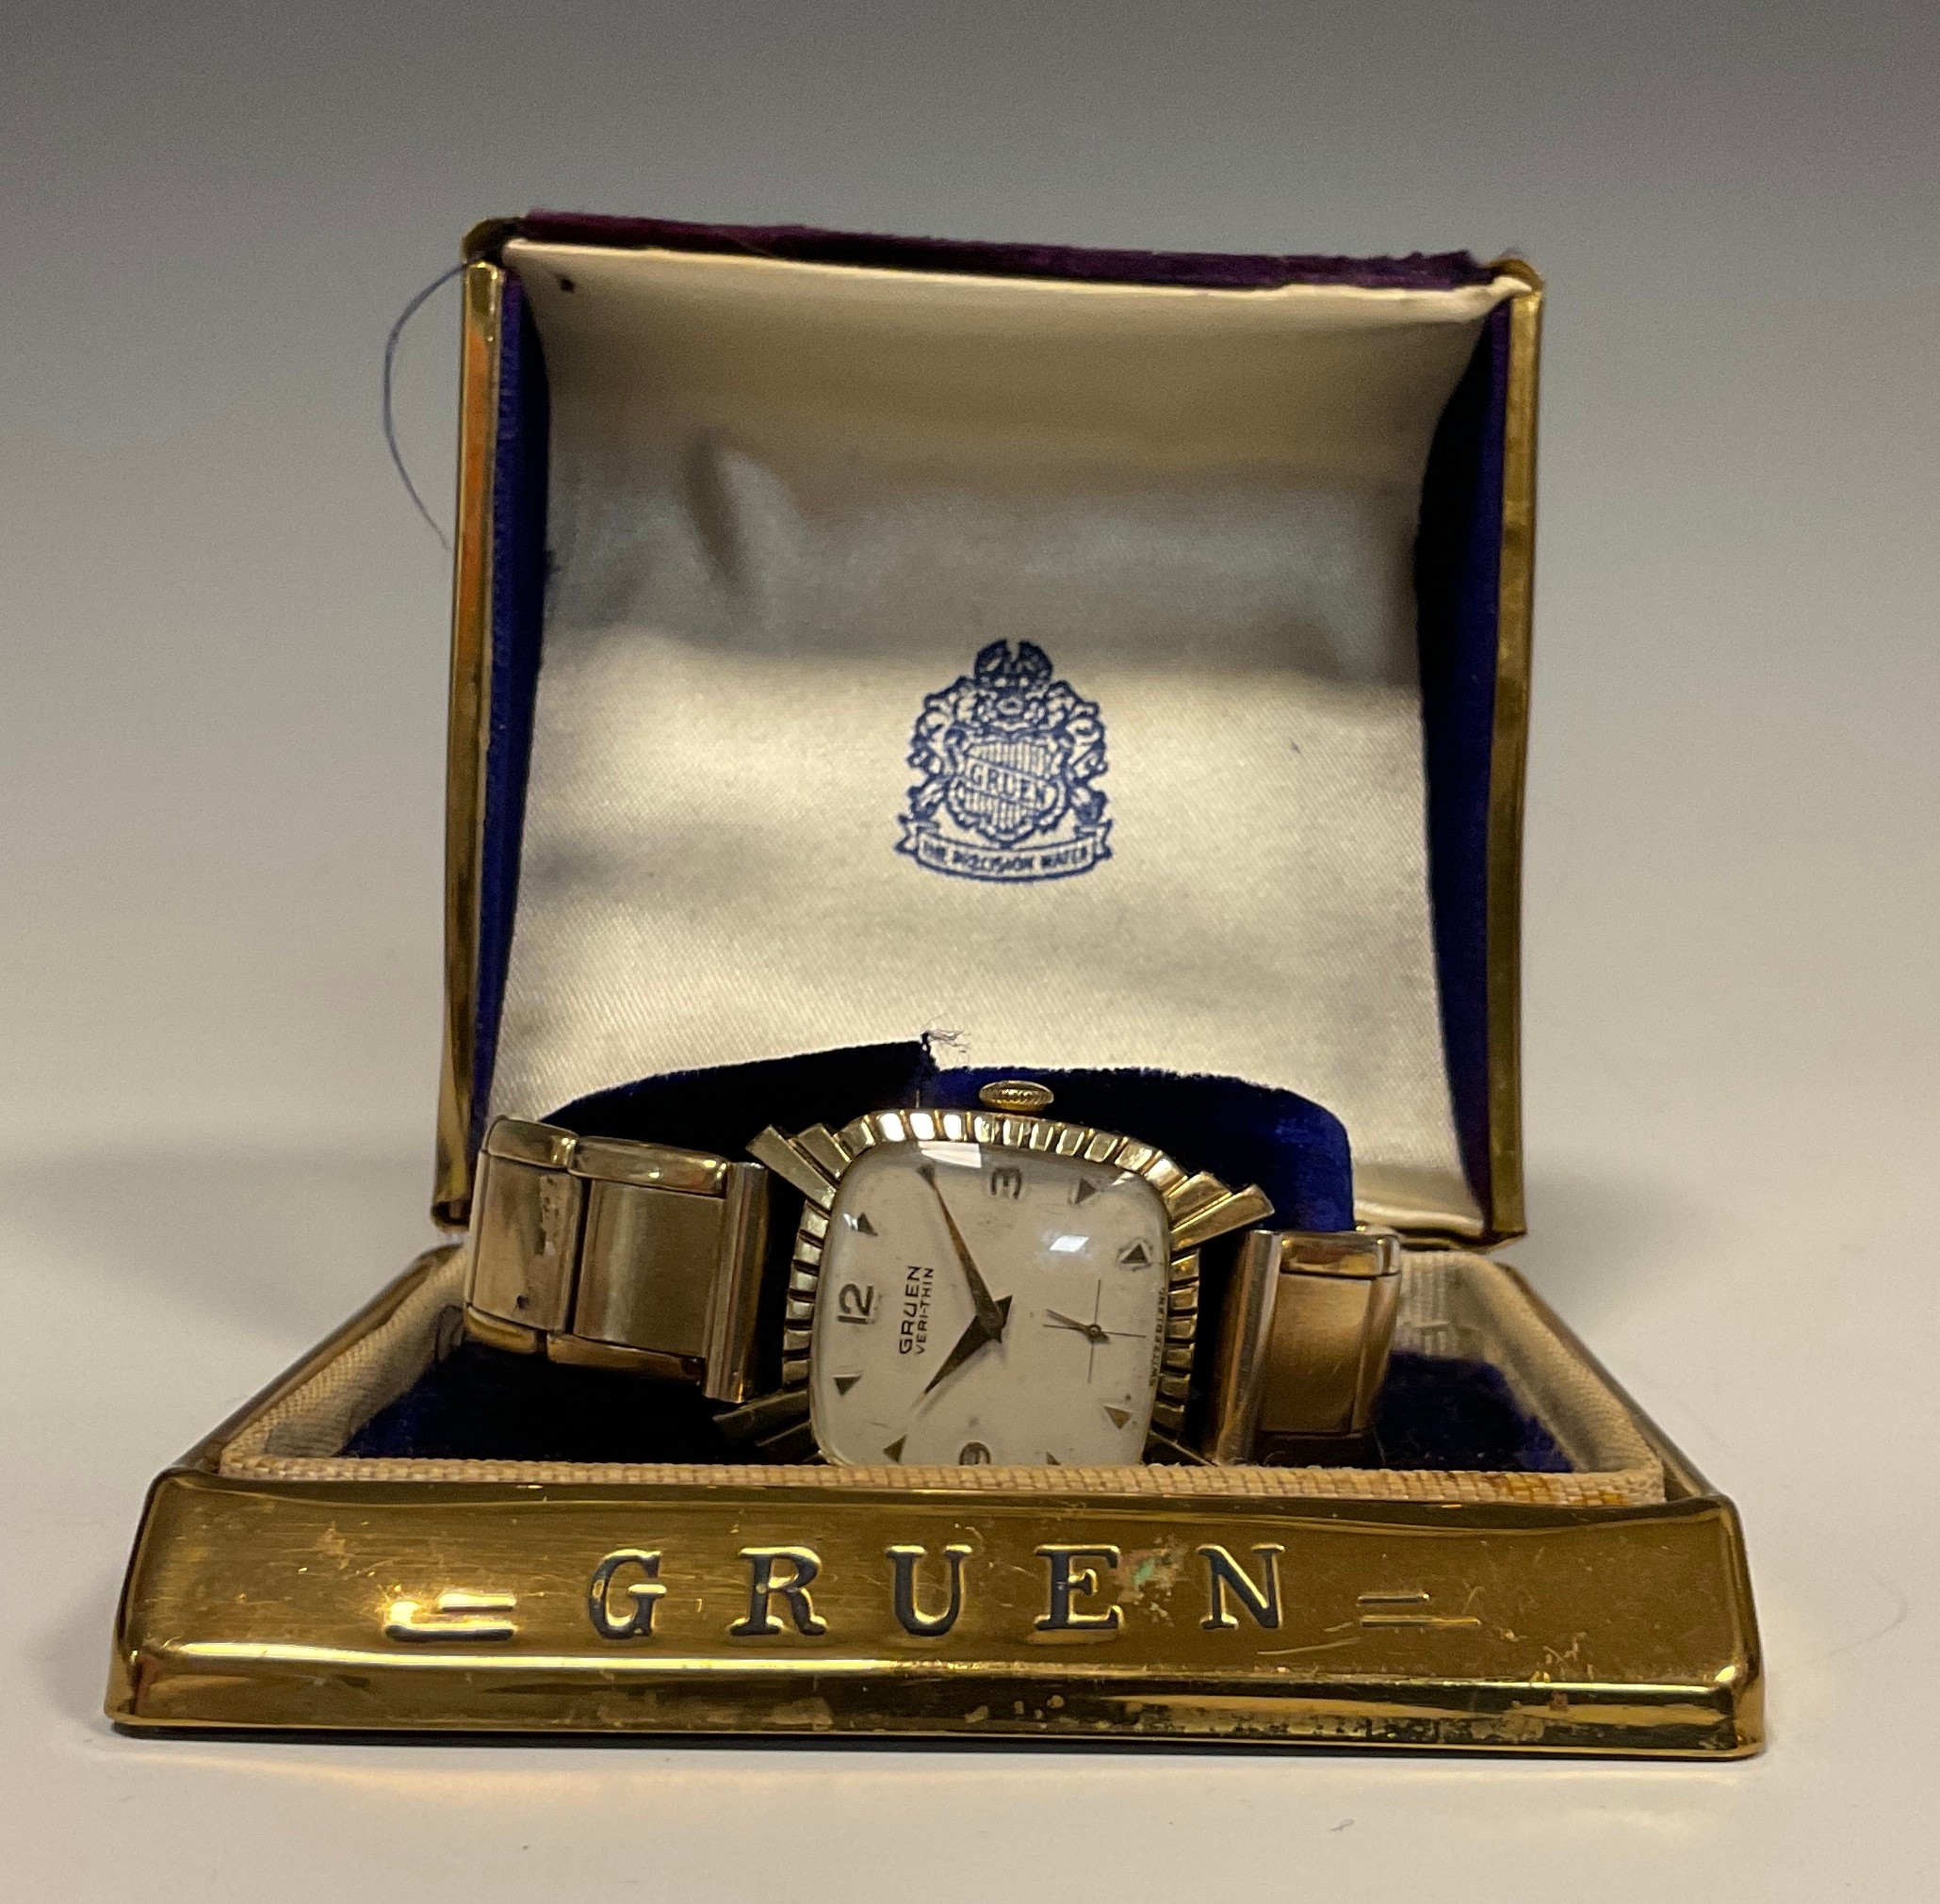 Gruen - Veri-Thin 1930s bracelet wristwatch, 26mm wide case, cream dial, Arabic numeral and - Image 2 of 2